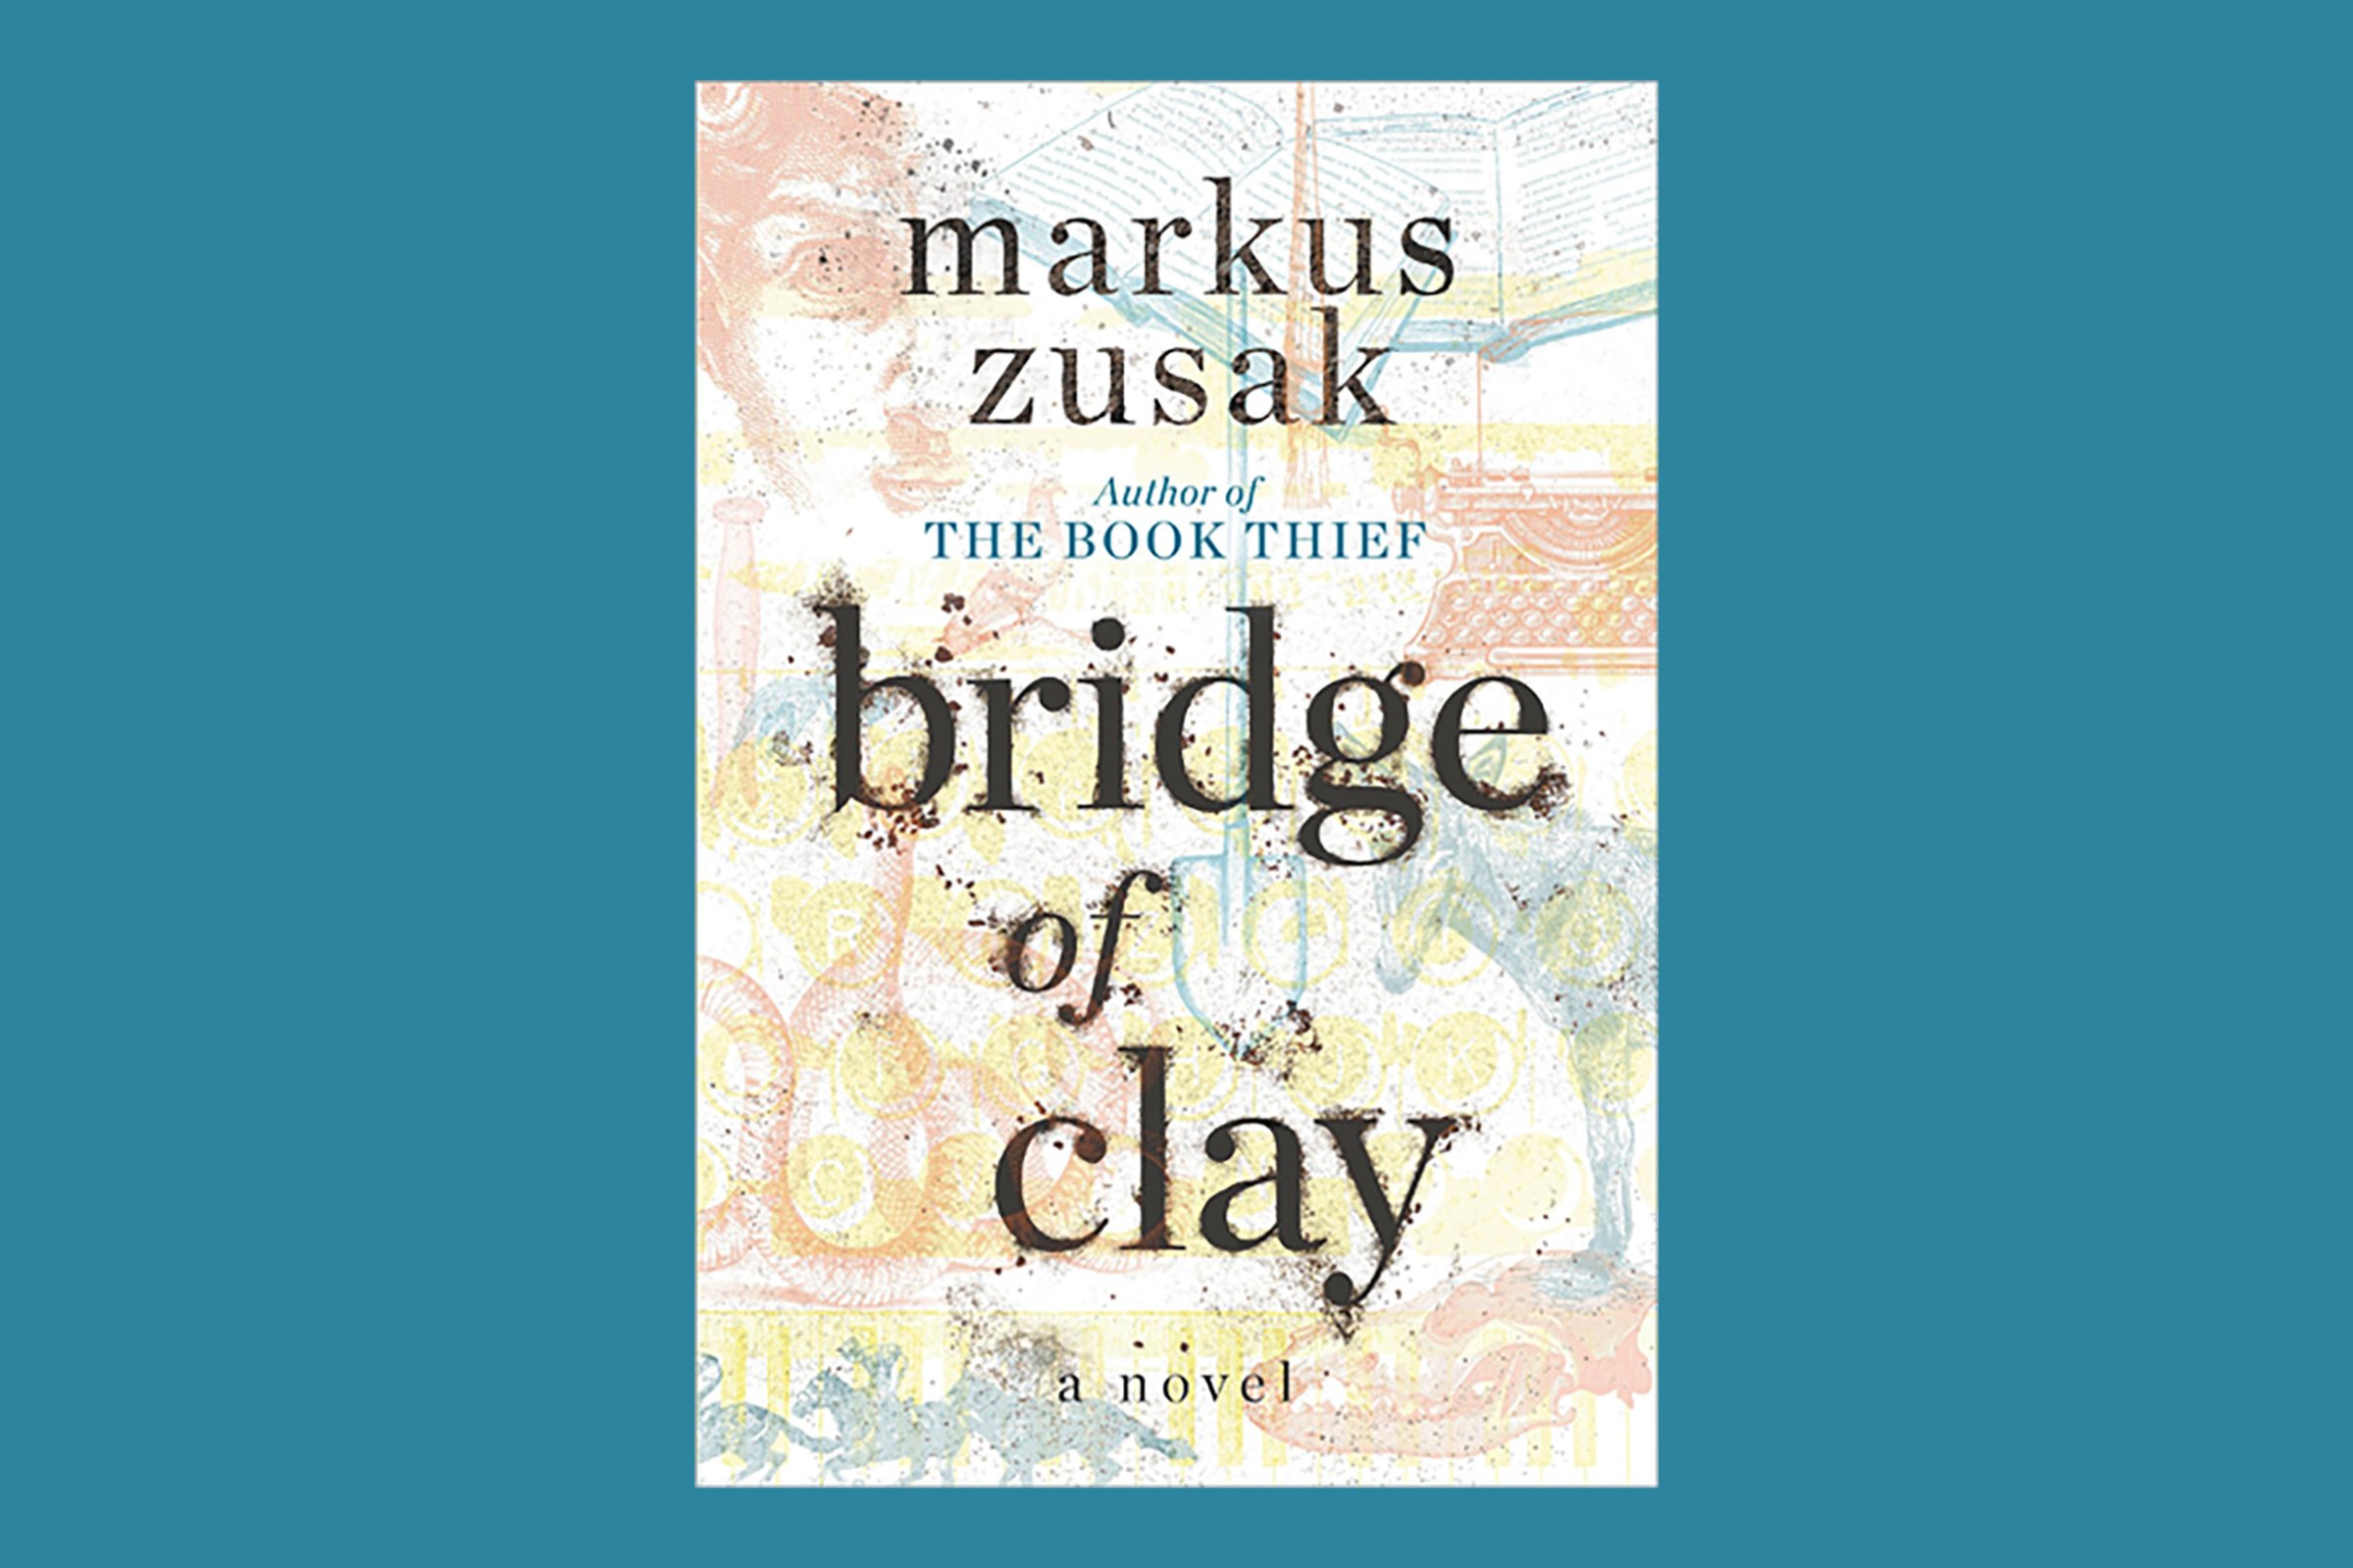 Book Thief author Markus Zusak's new novel, Bridge of Clay